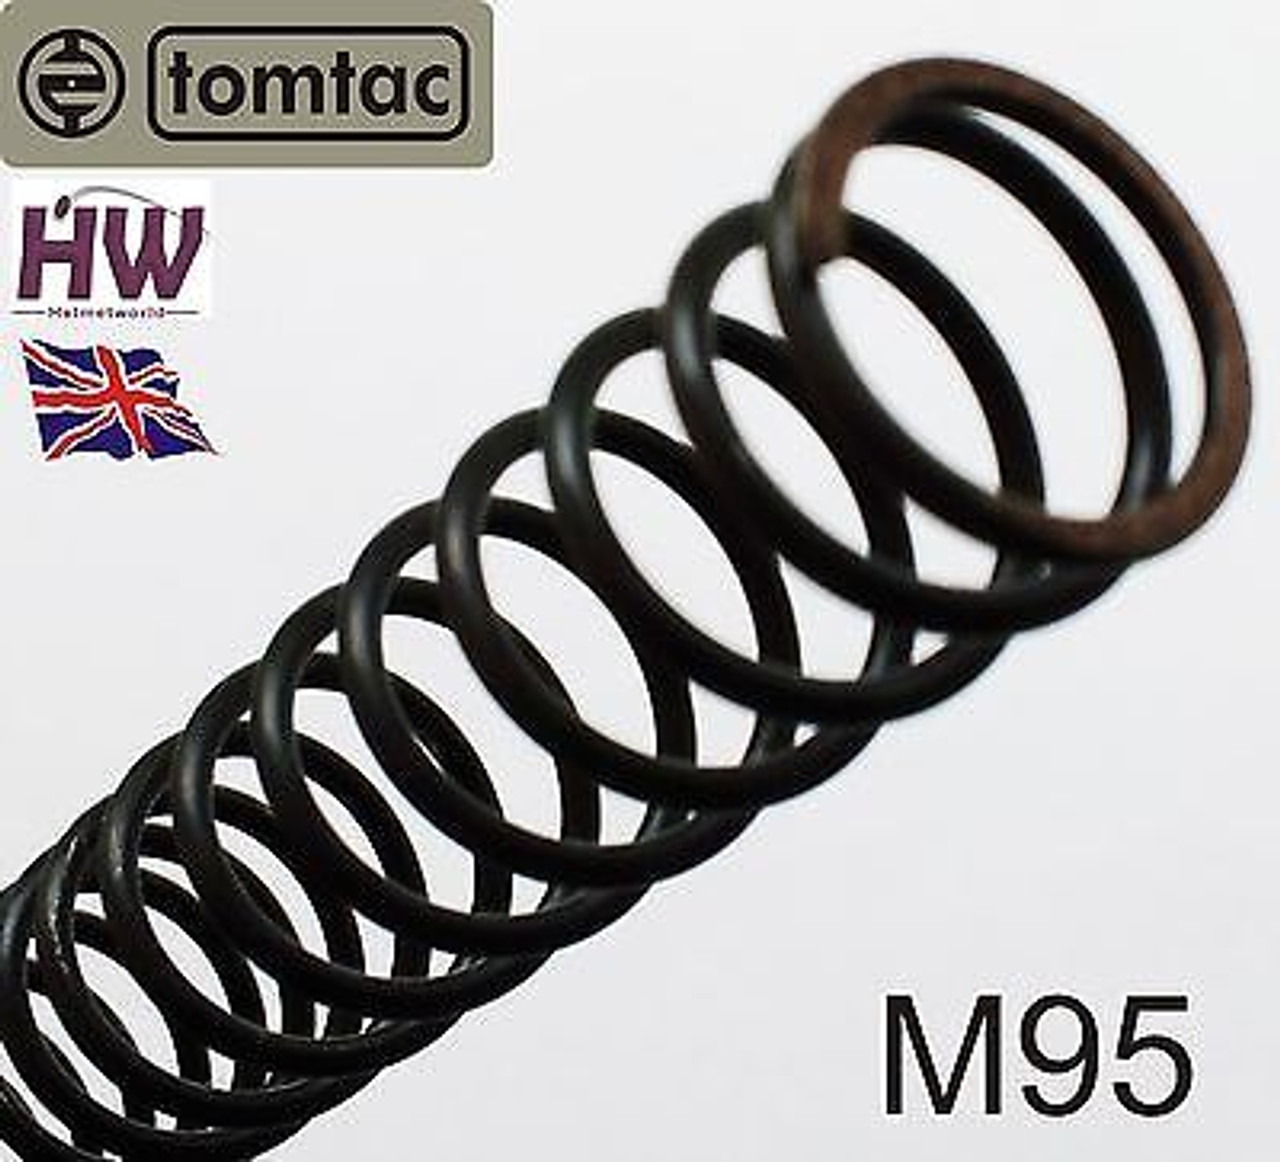 Tomtac M95 Spring High Quality Steel Linear Fast Uk Ultimate Upgrade